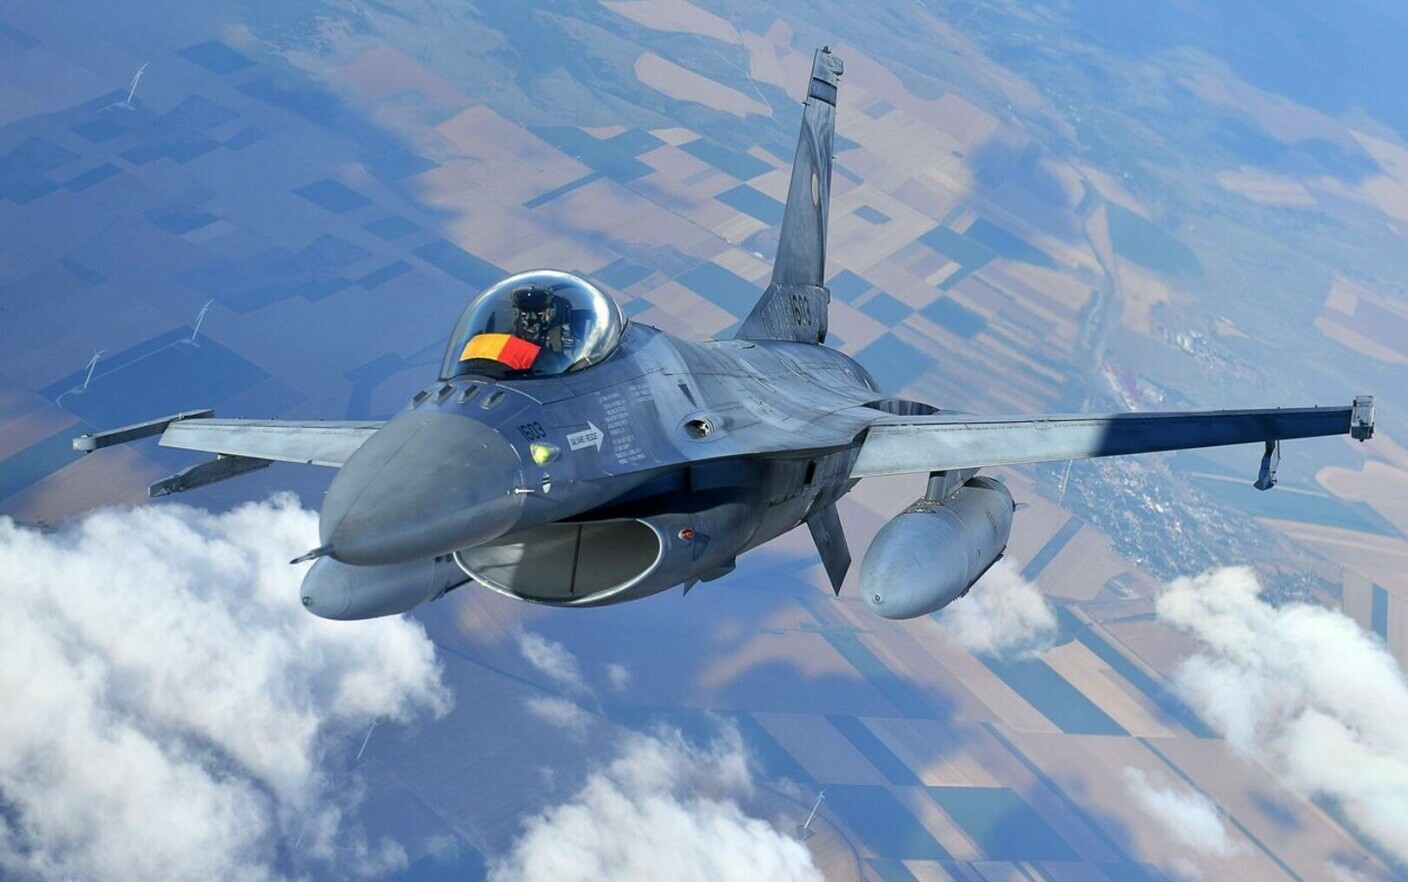 Avioane F-16 sursă foto: StirileProTV